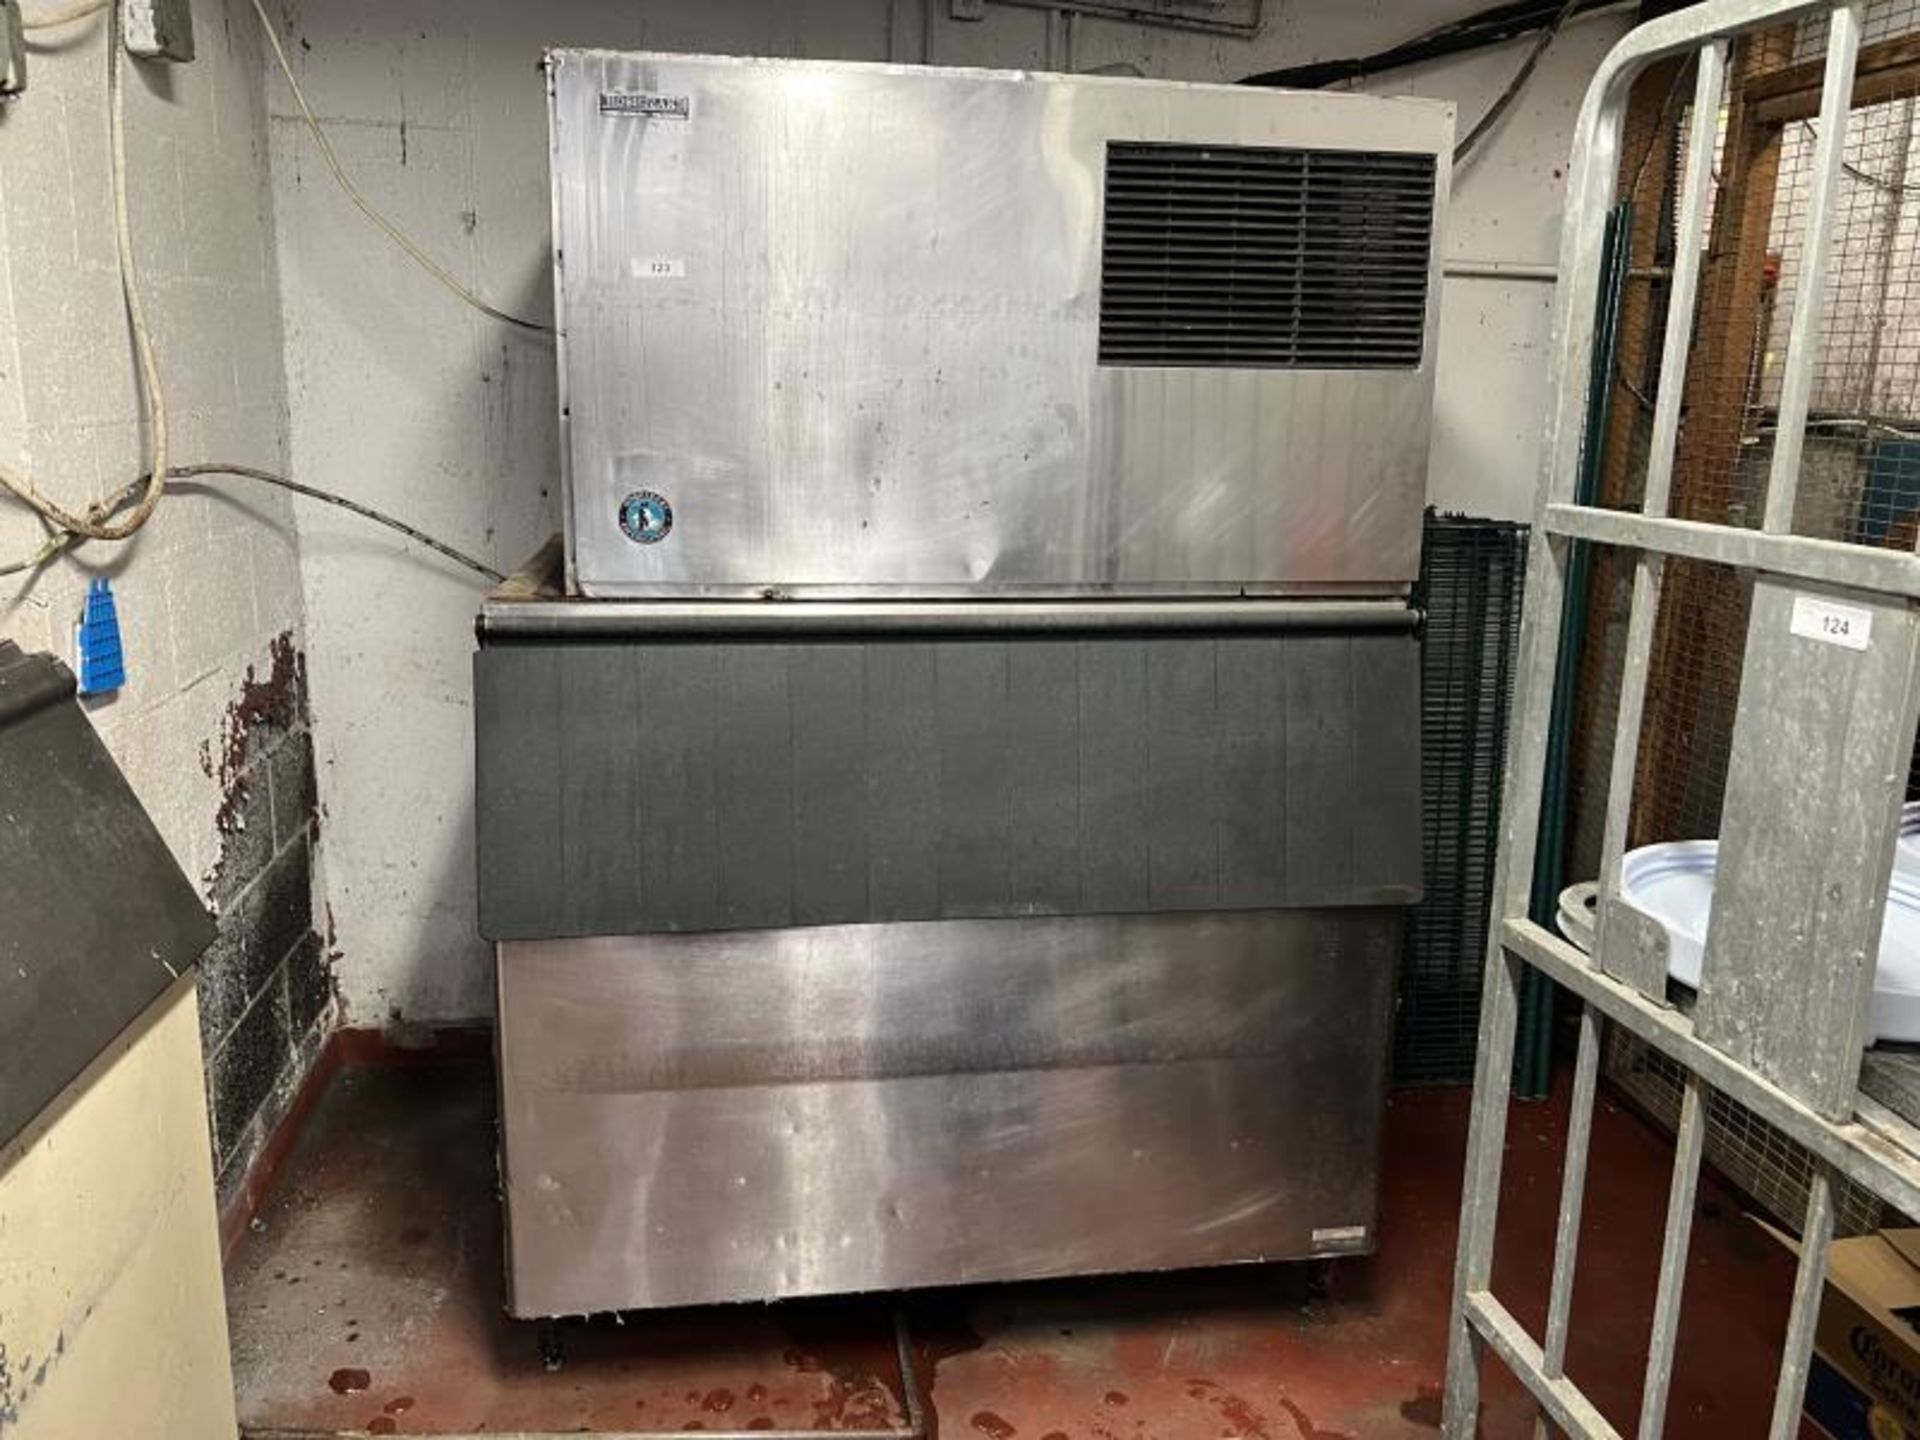 Hoshizaki Ice Maker, Working, M: KM-1200SRE in Basement Kitchen